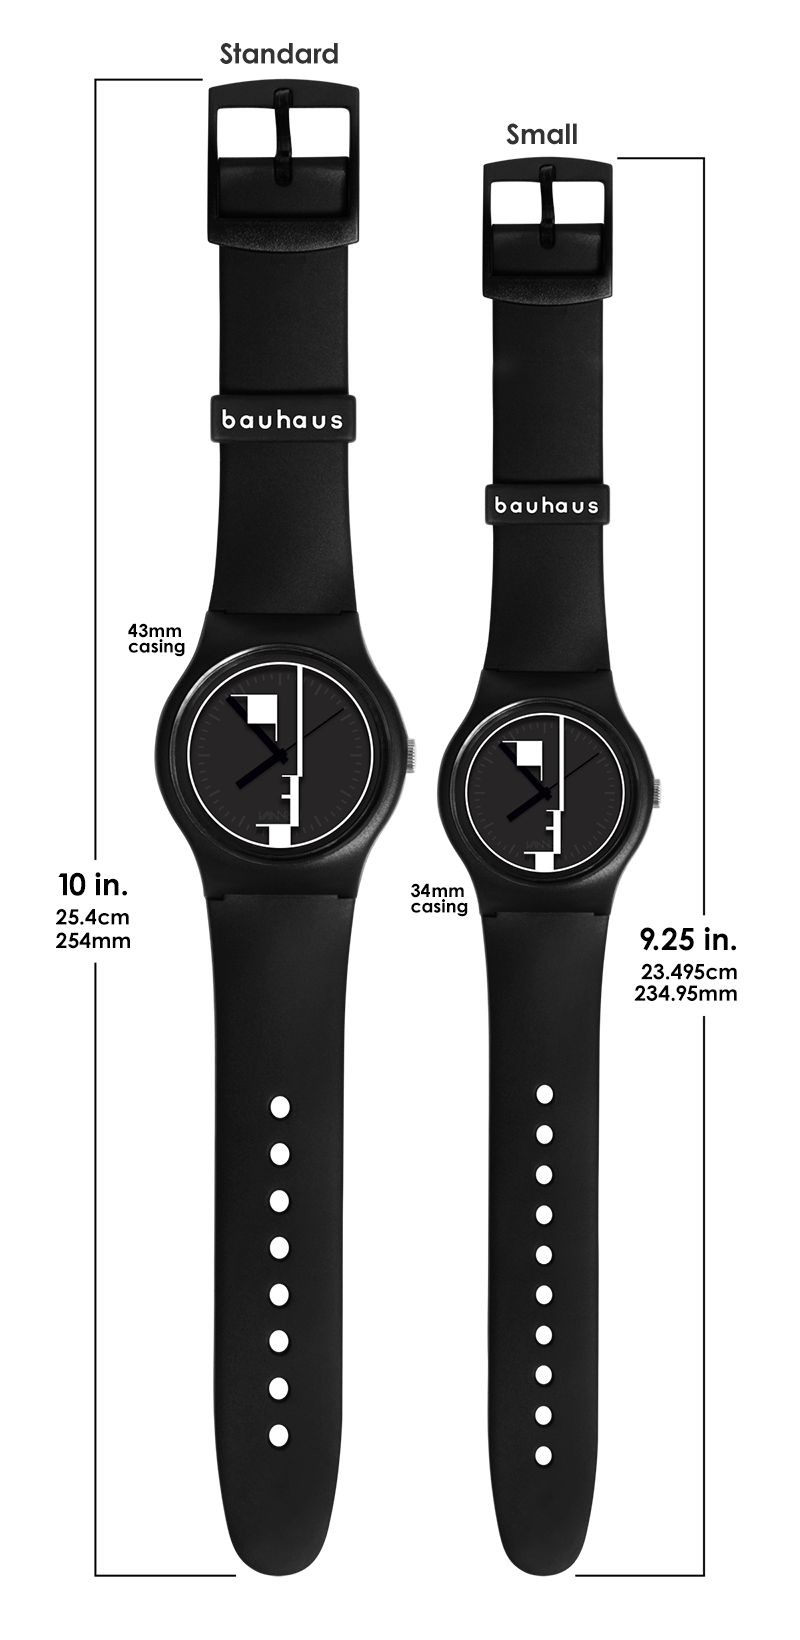 Size small Bauhaus x Vannen watch comparison chart